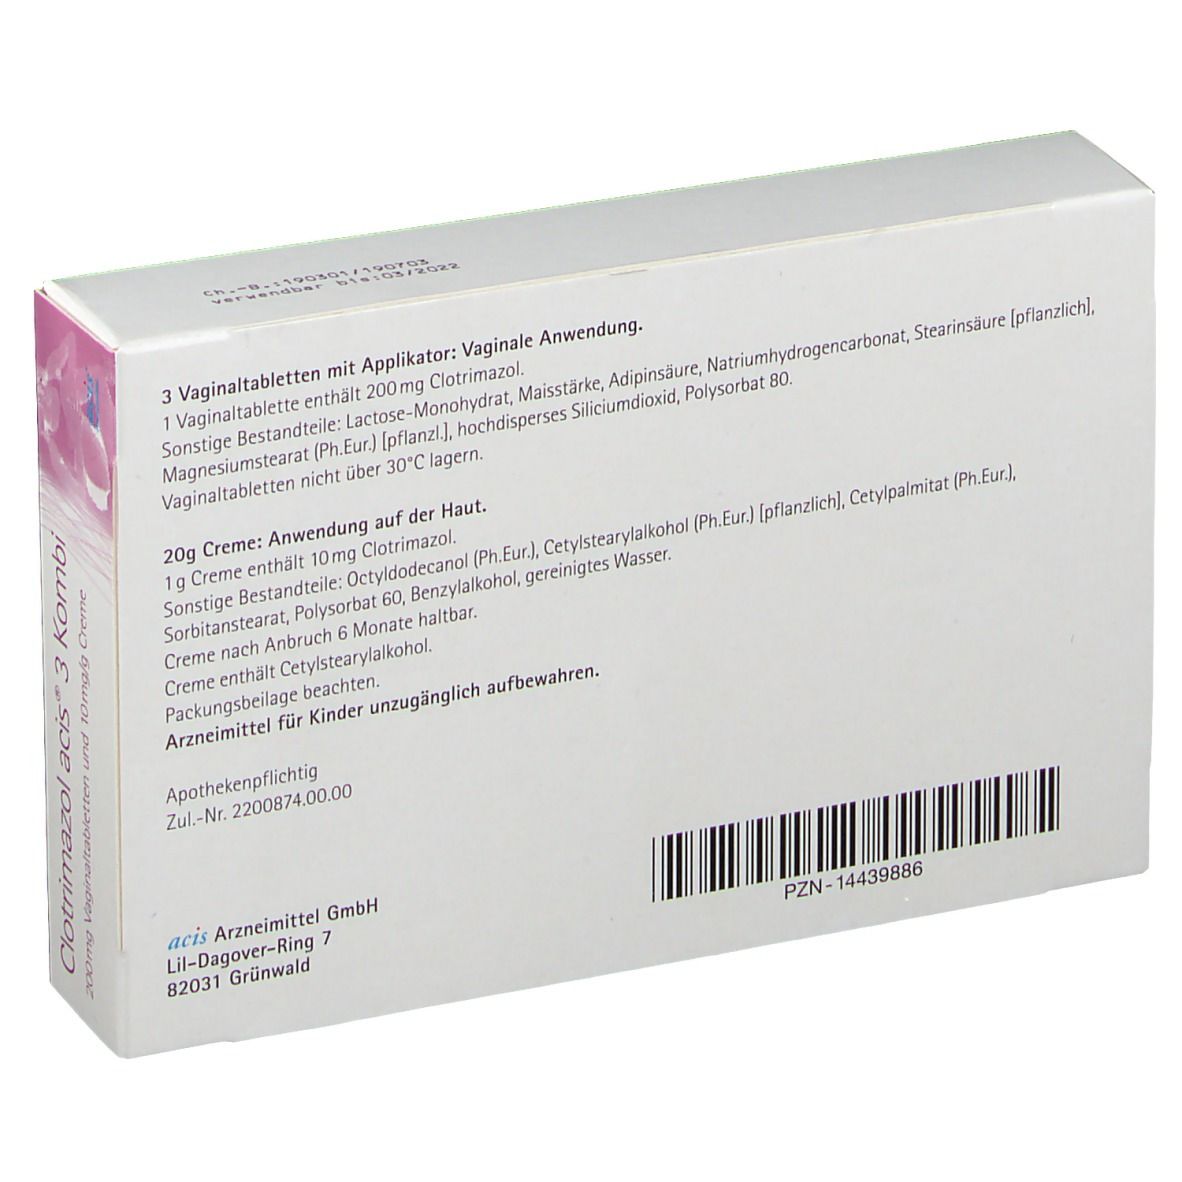 Clotrimazolacis® 3 Kombipackung